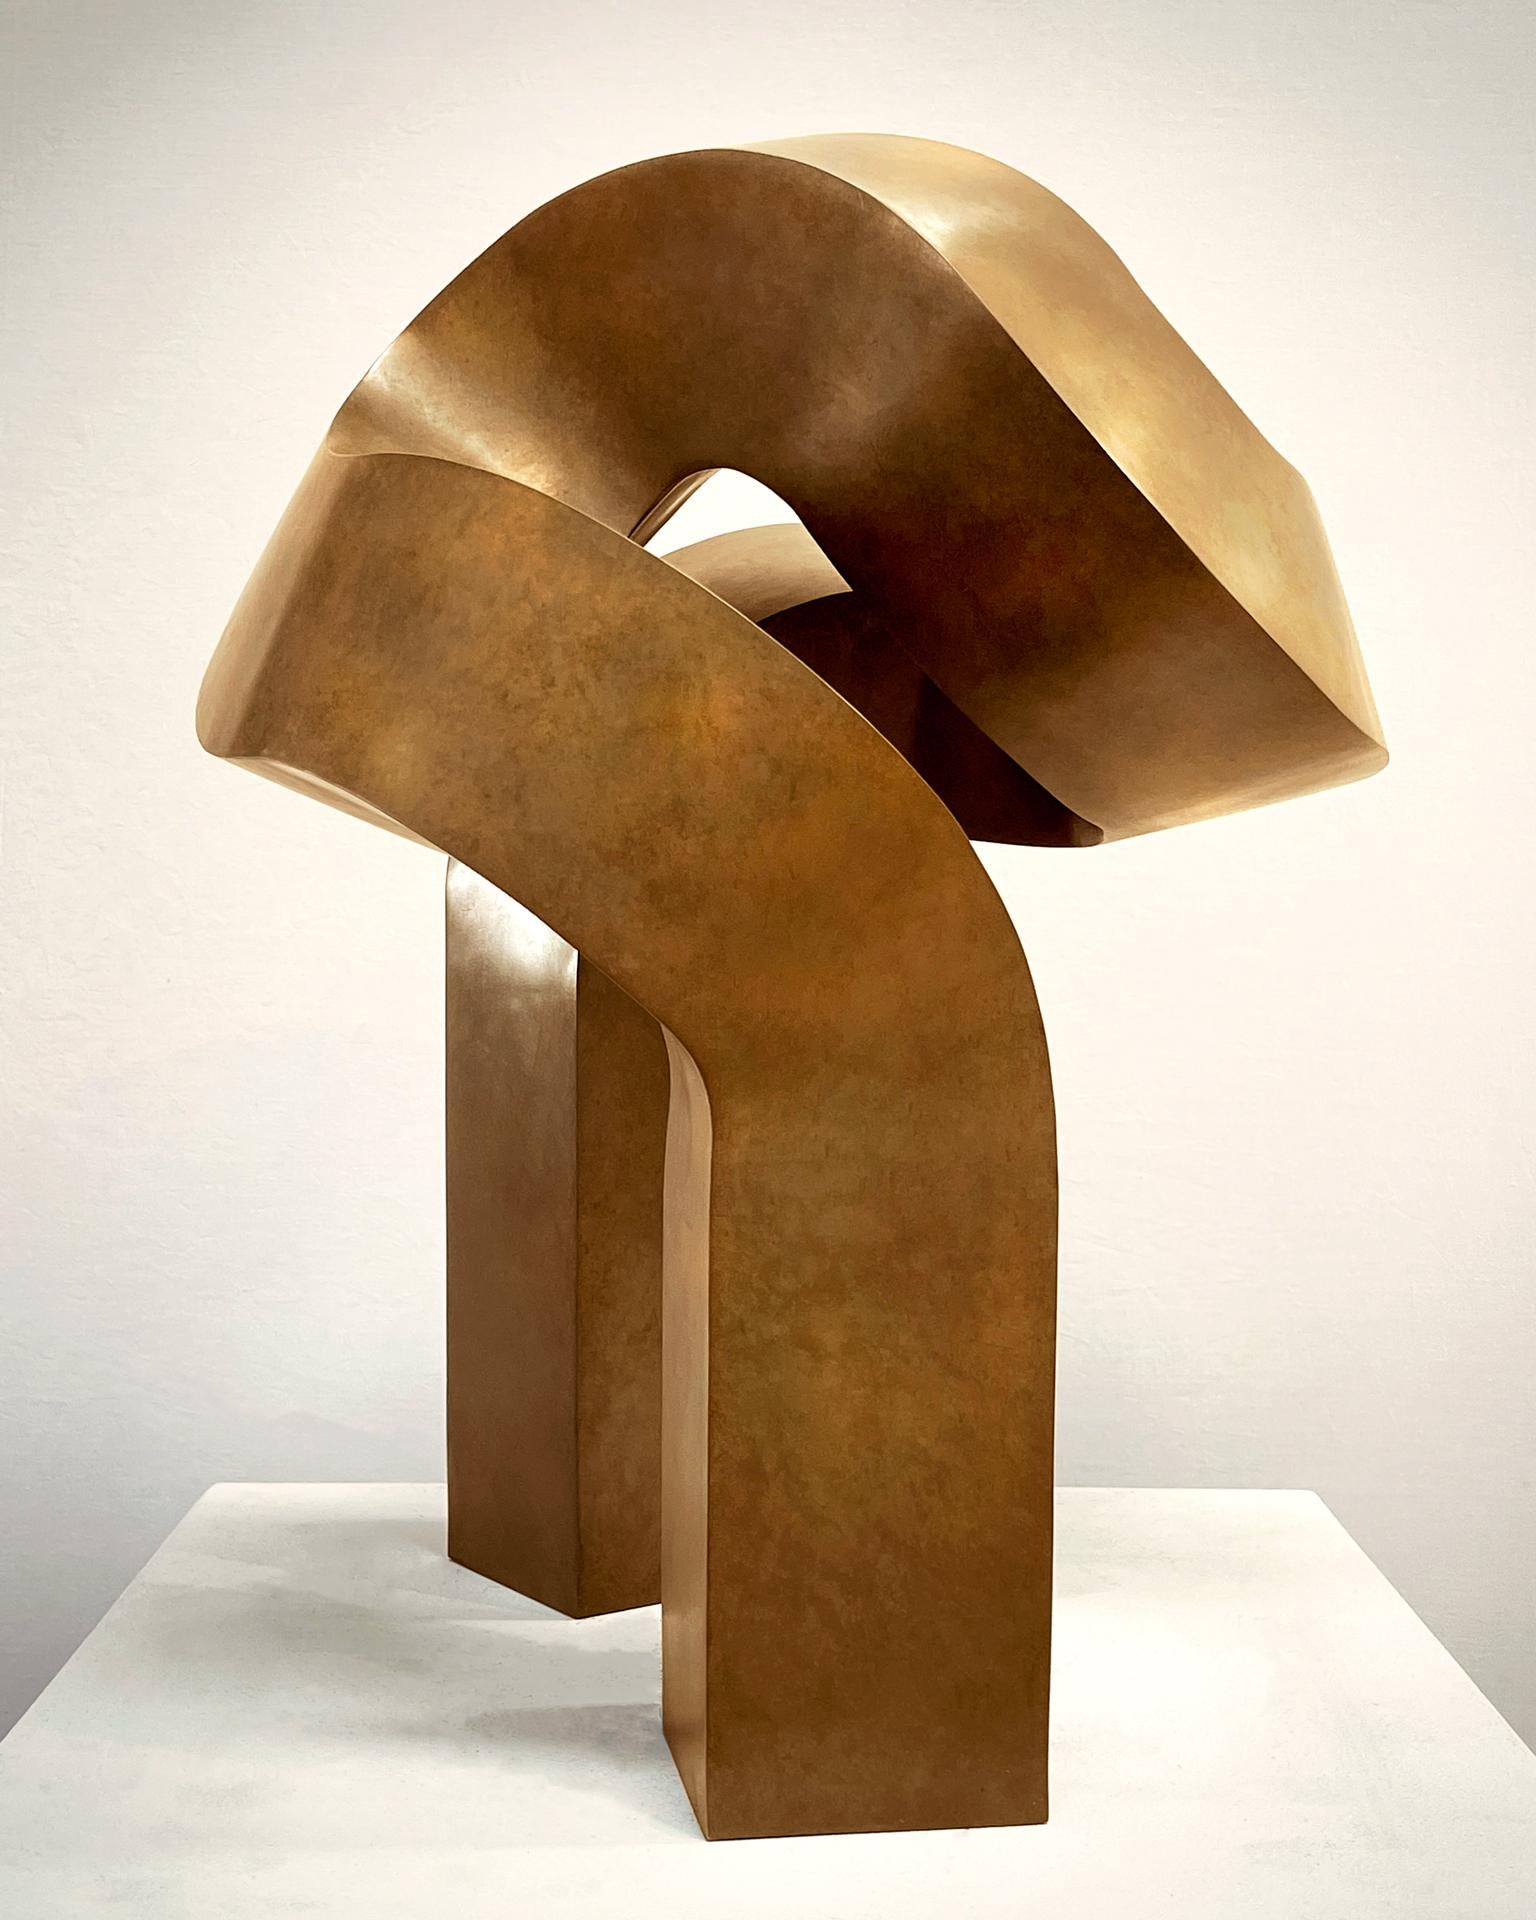 Clement Meadmore Abstract Sculpture - "Moreover" minimalist bronze sculpture 